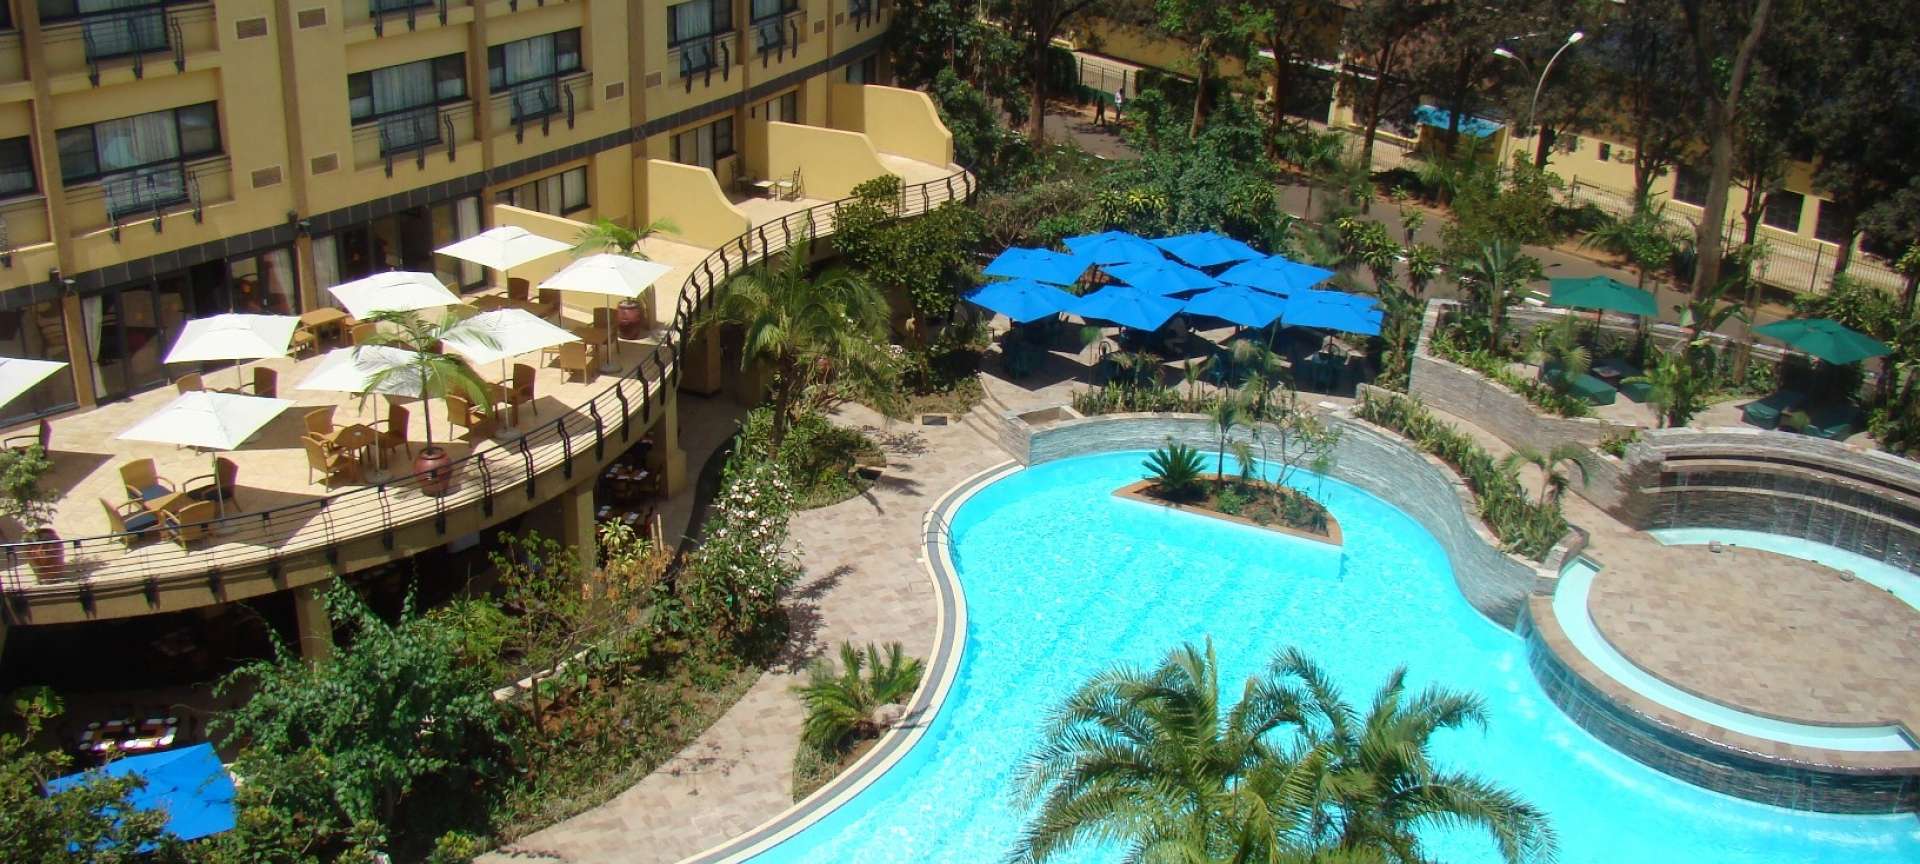 Kigali Serena Hotel Pool Area